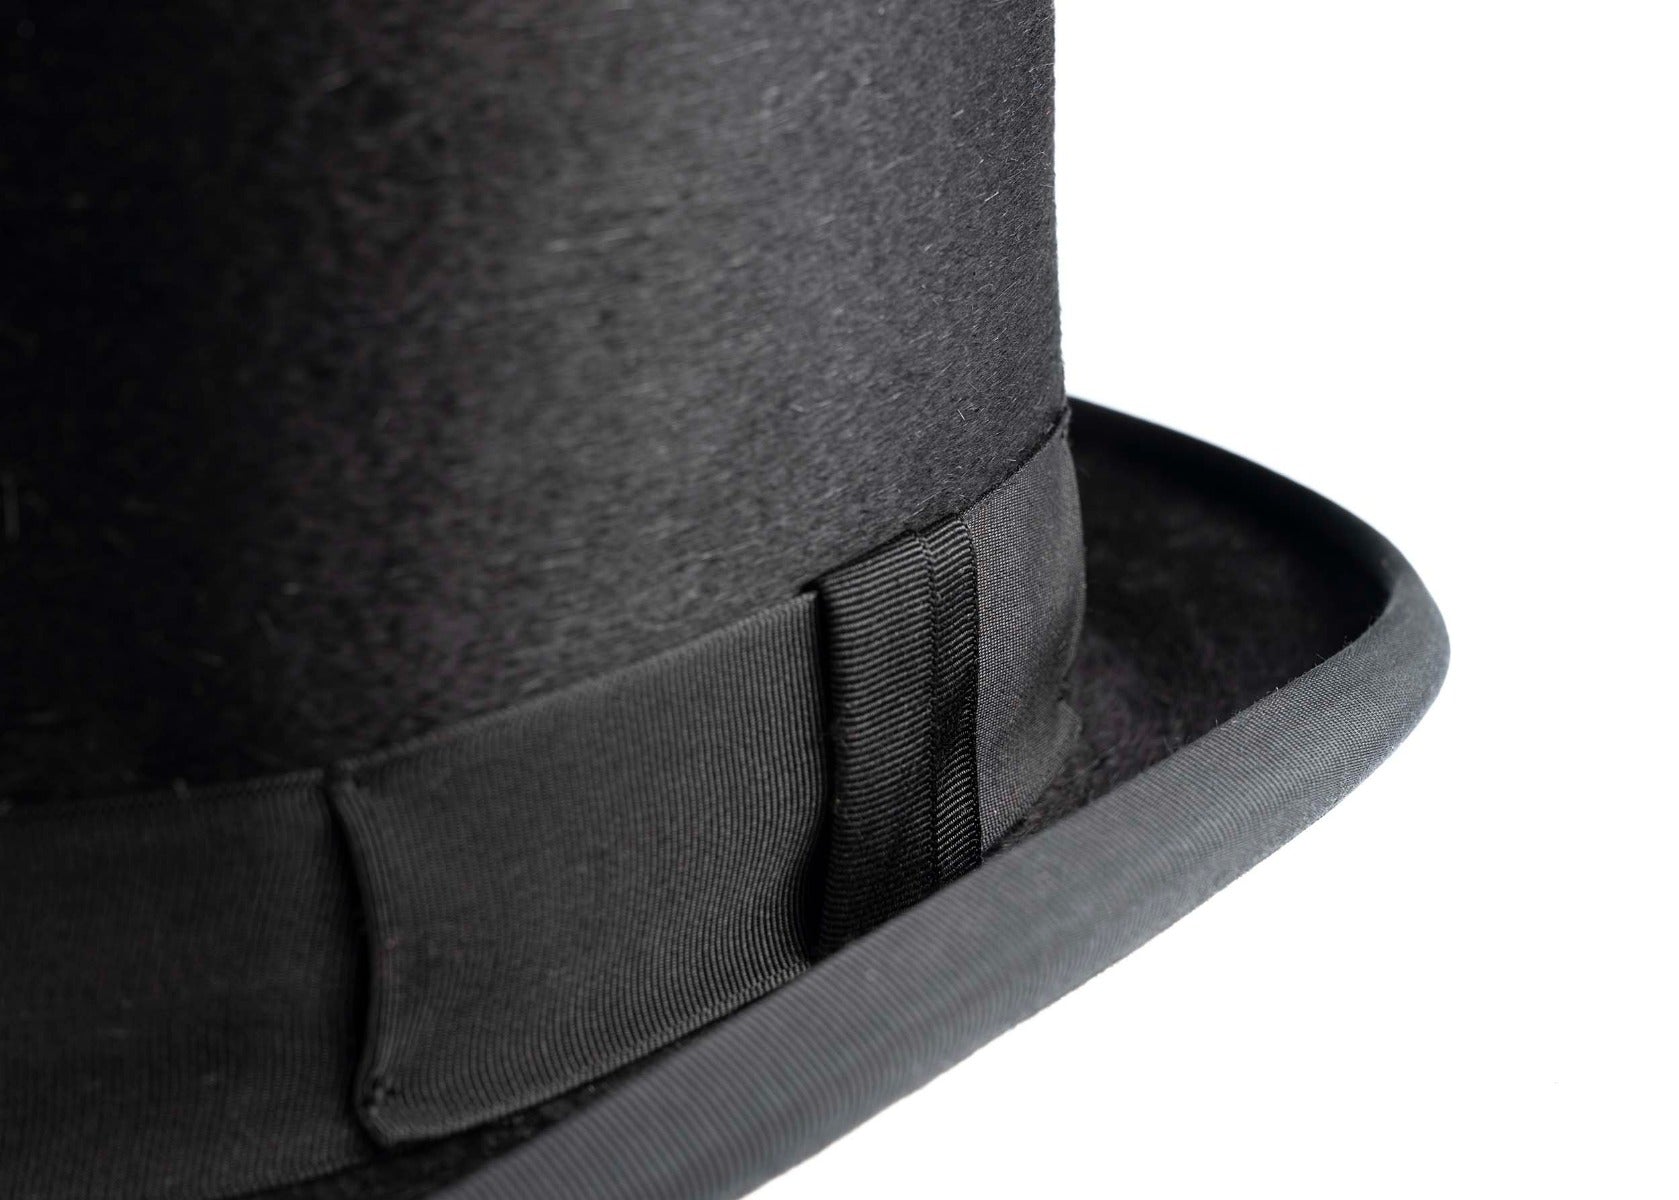 Luxury Black Fur Felt Melusine TALLER TOP HAT